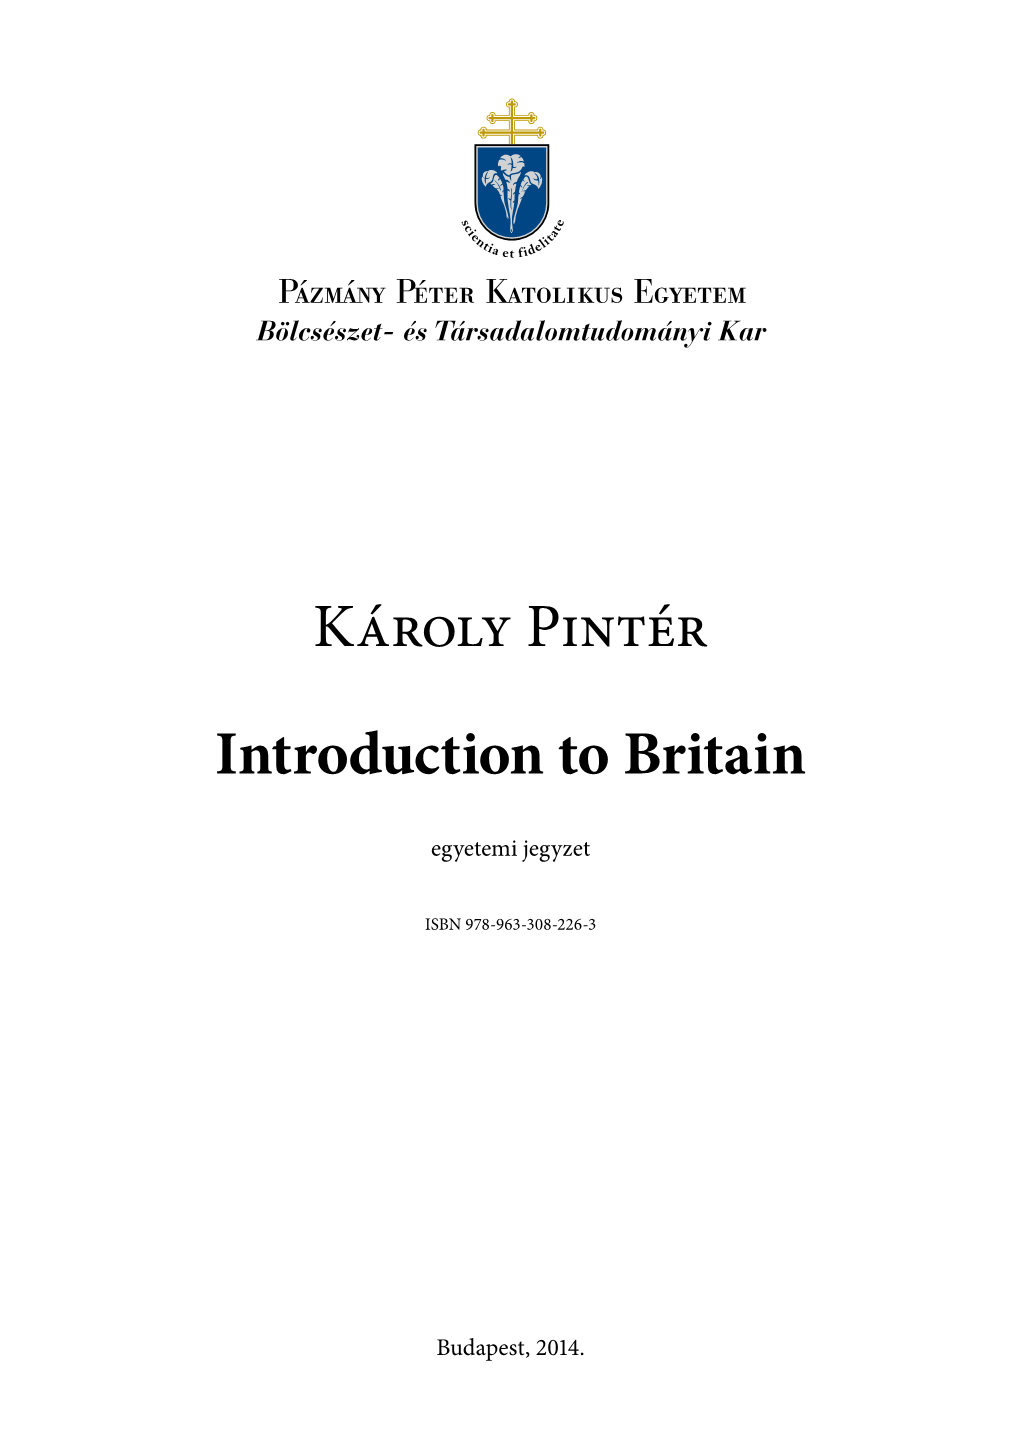 Károly Pintér Introduction to Britain